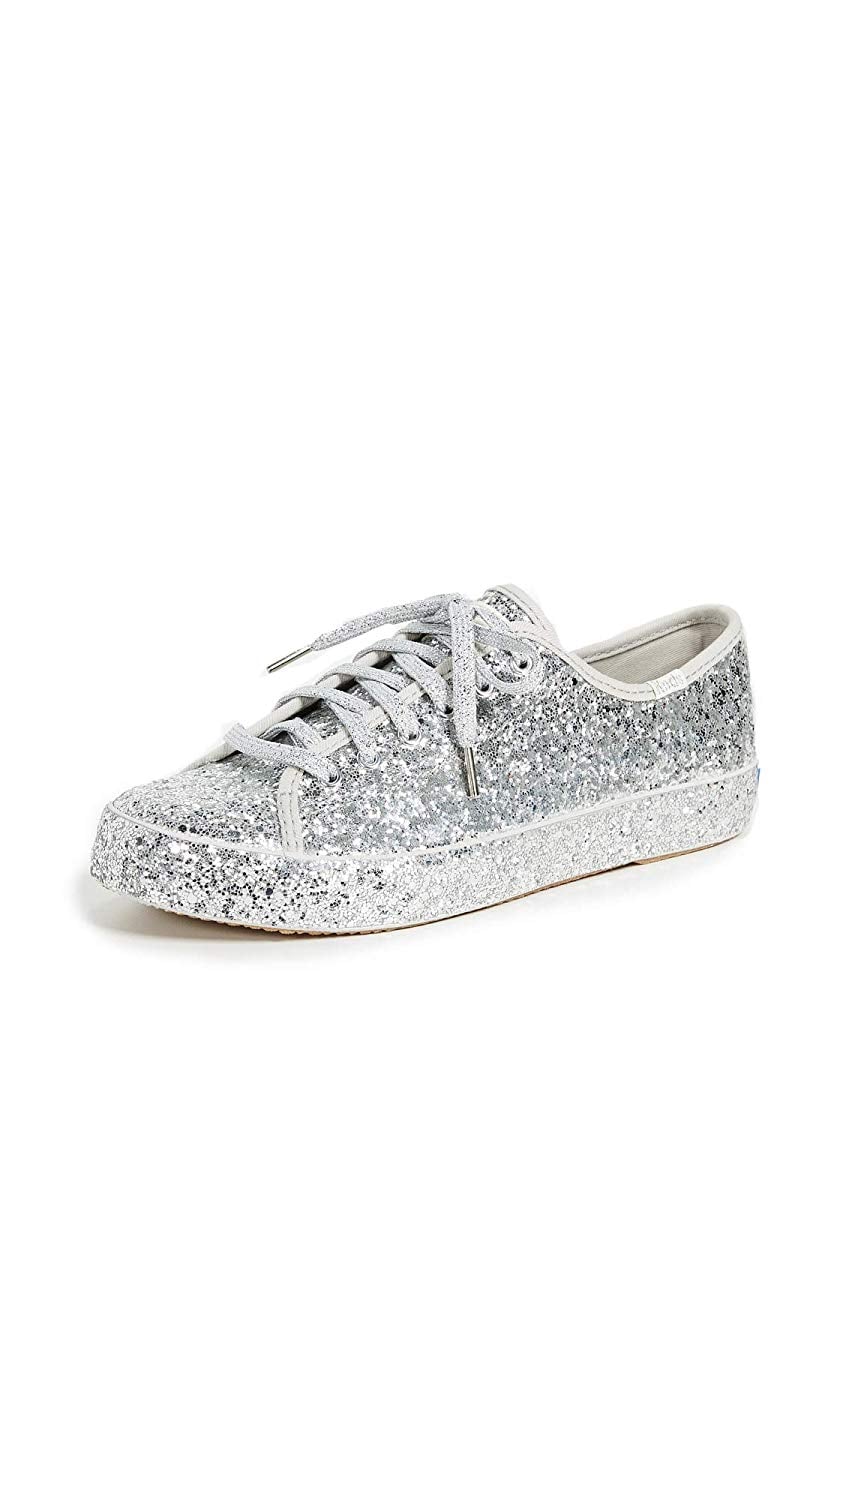 Keds x Kate Spade Glitter Sneakers on Amazon | POPSUGAR Fashion